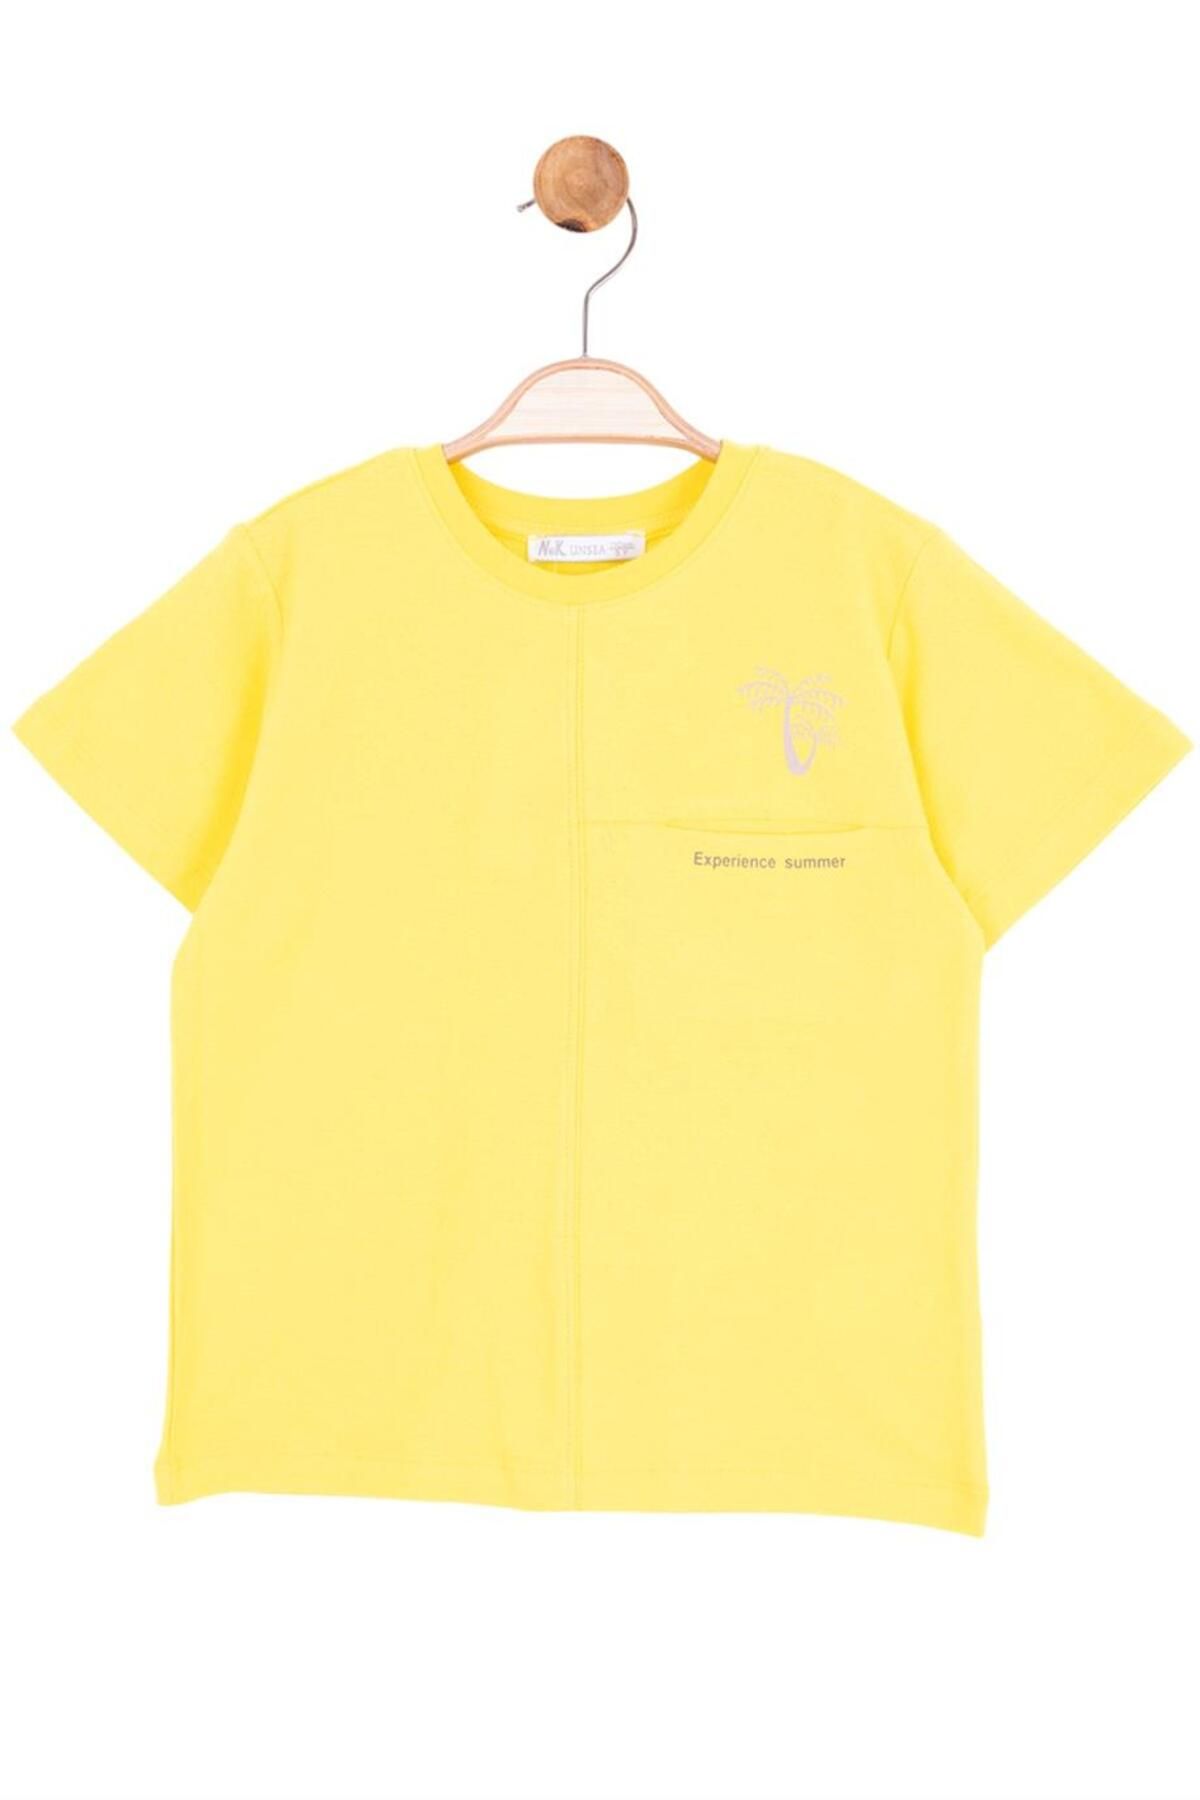 Nk Kids Erkek Çocuk Hawai Desen Dokuma T-shirt 44505 Sarı